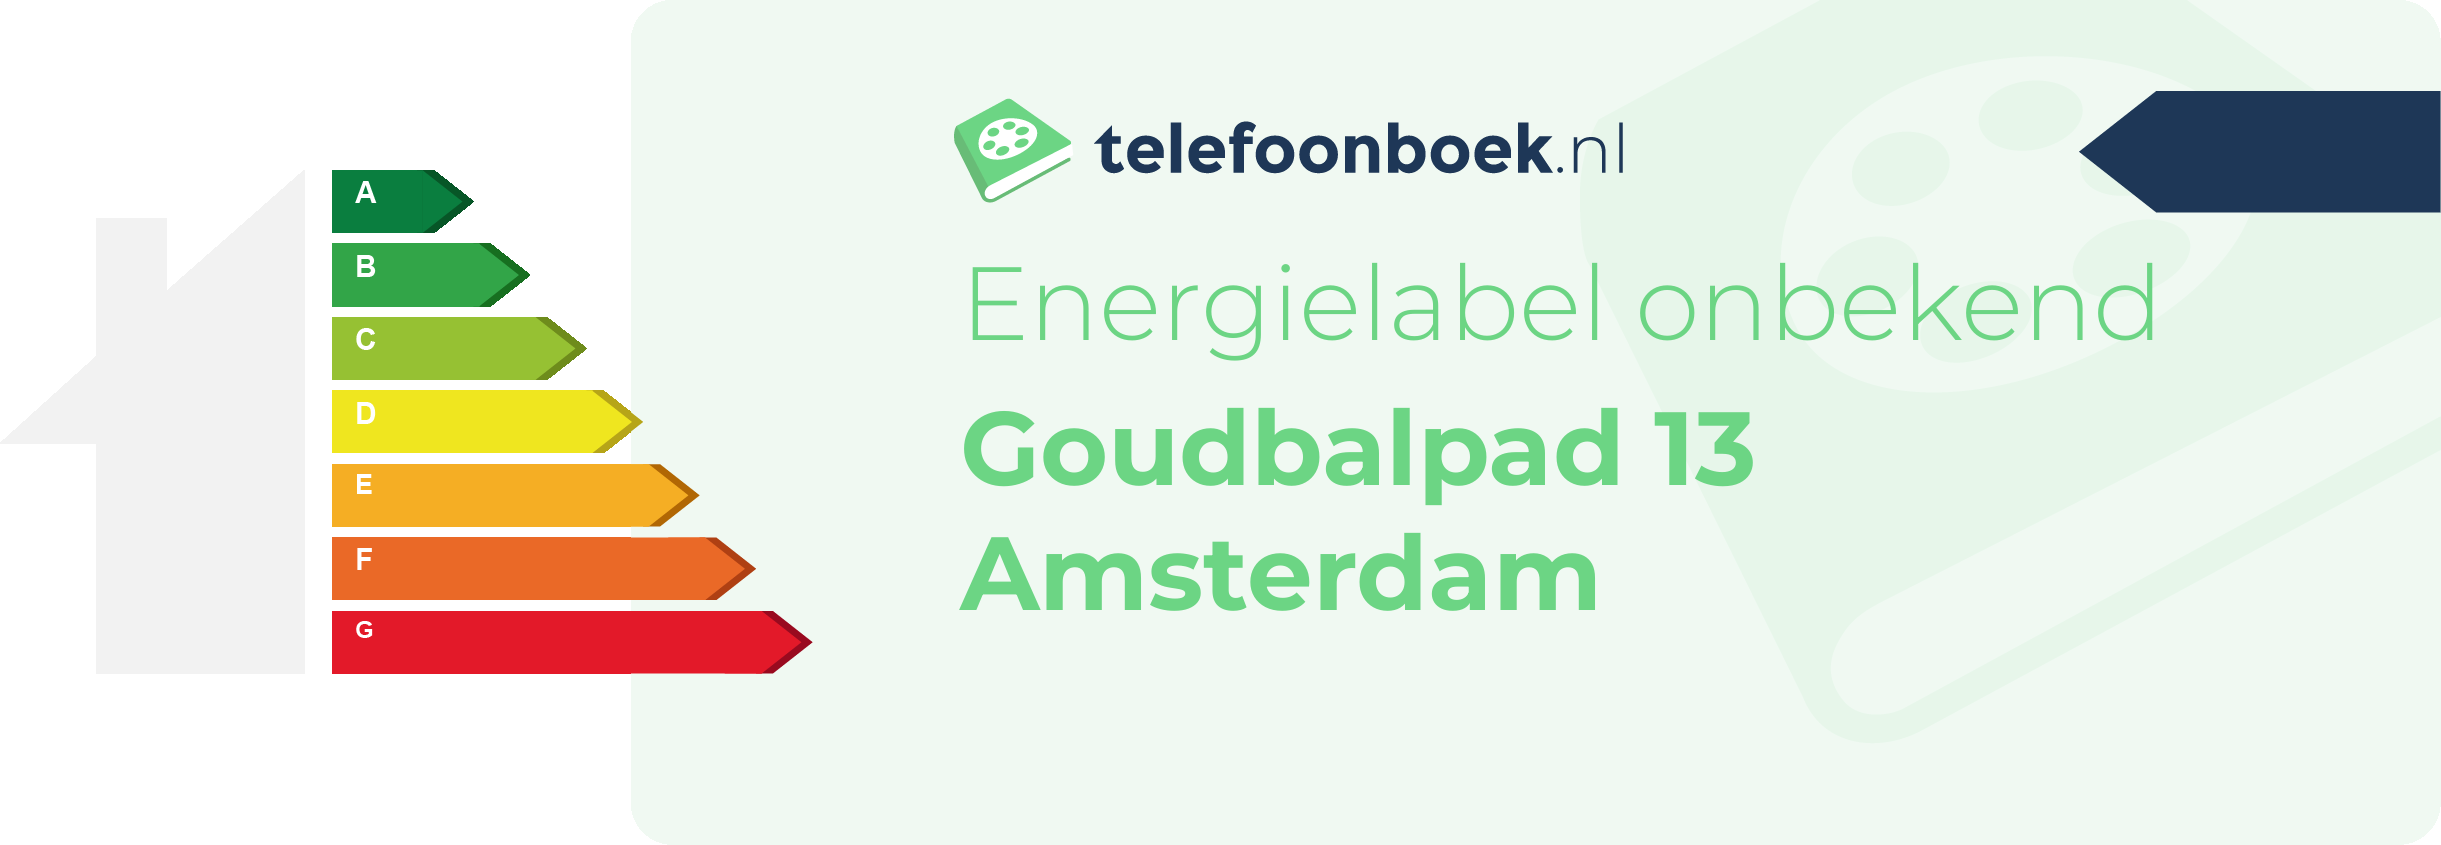 Energielabel Goudbalpad 13 Amsterdam